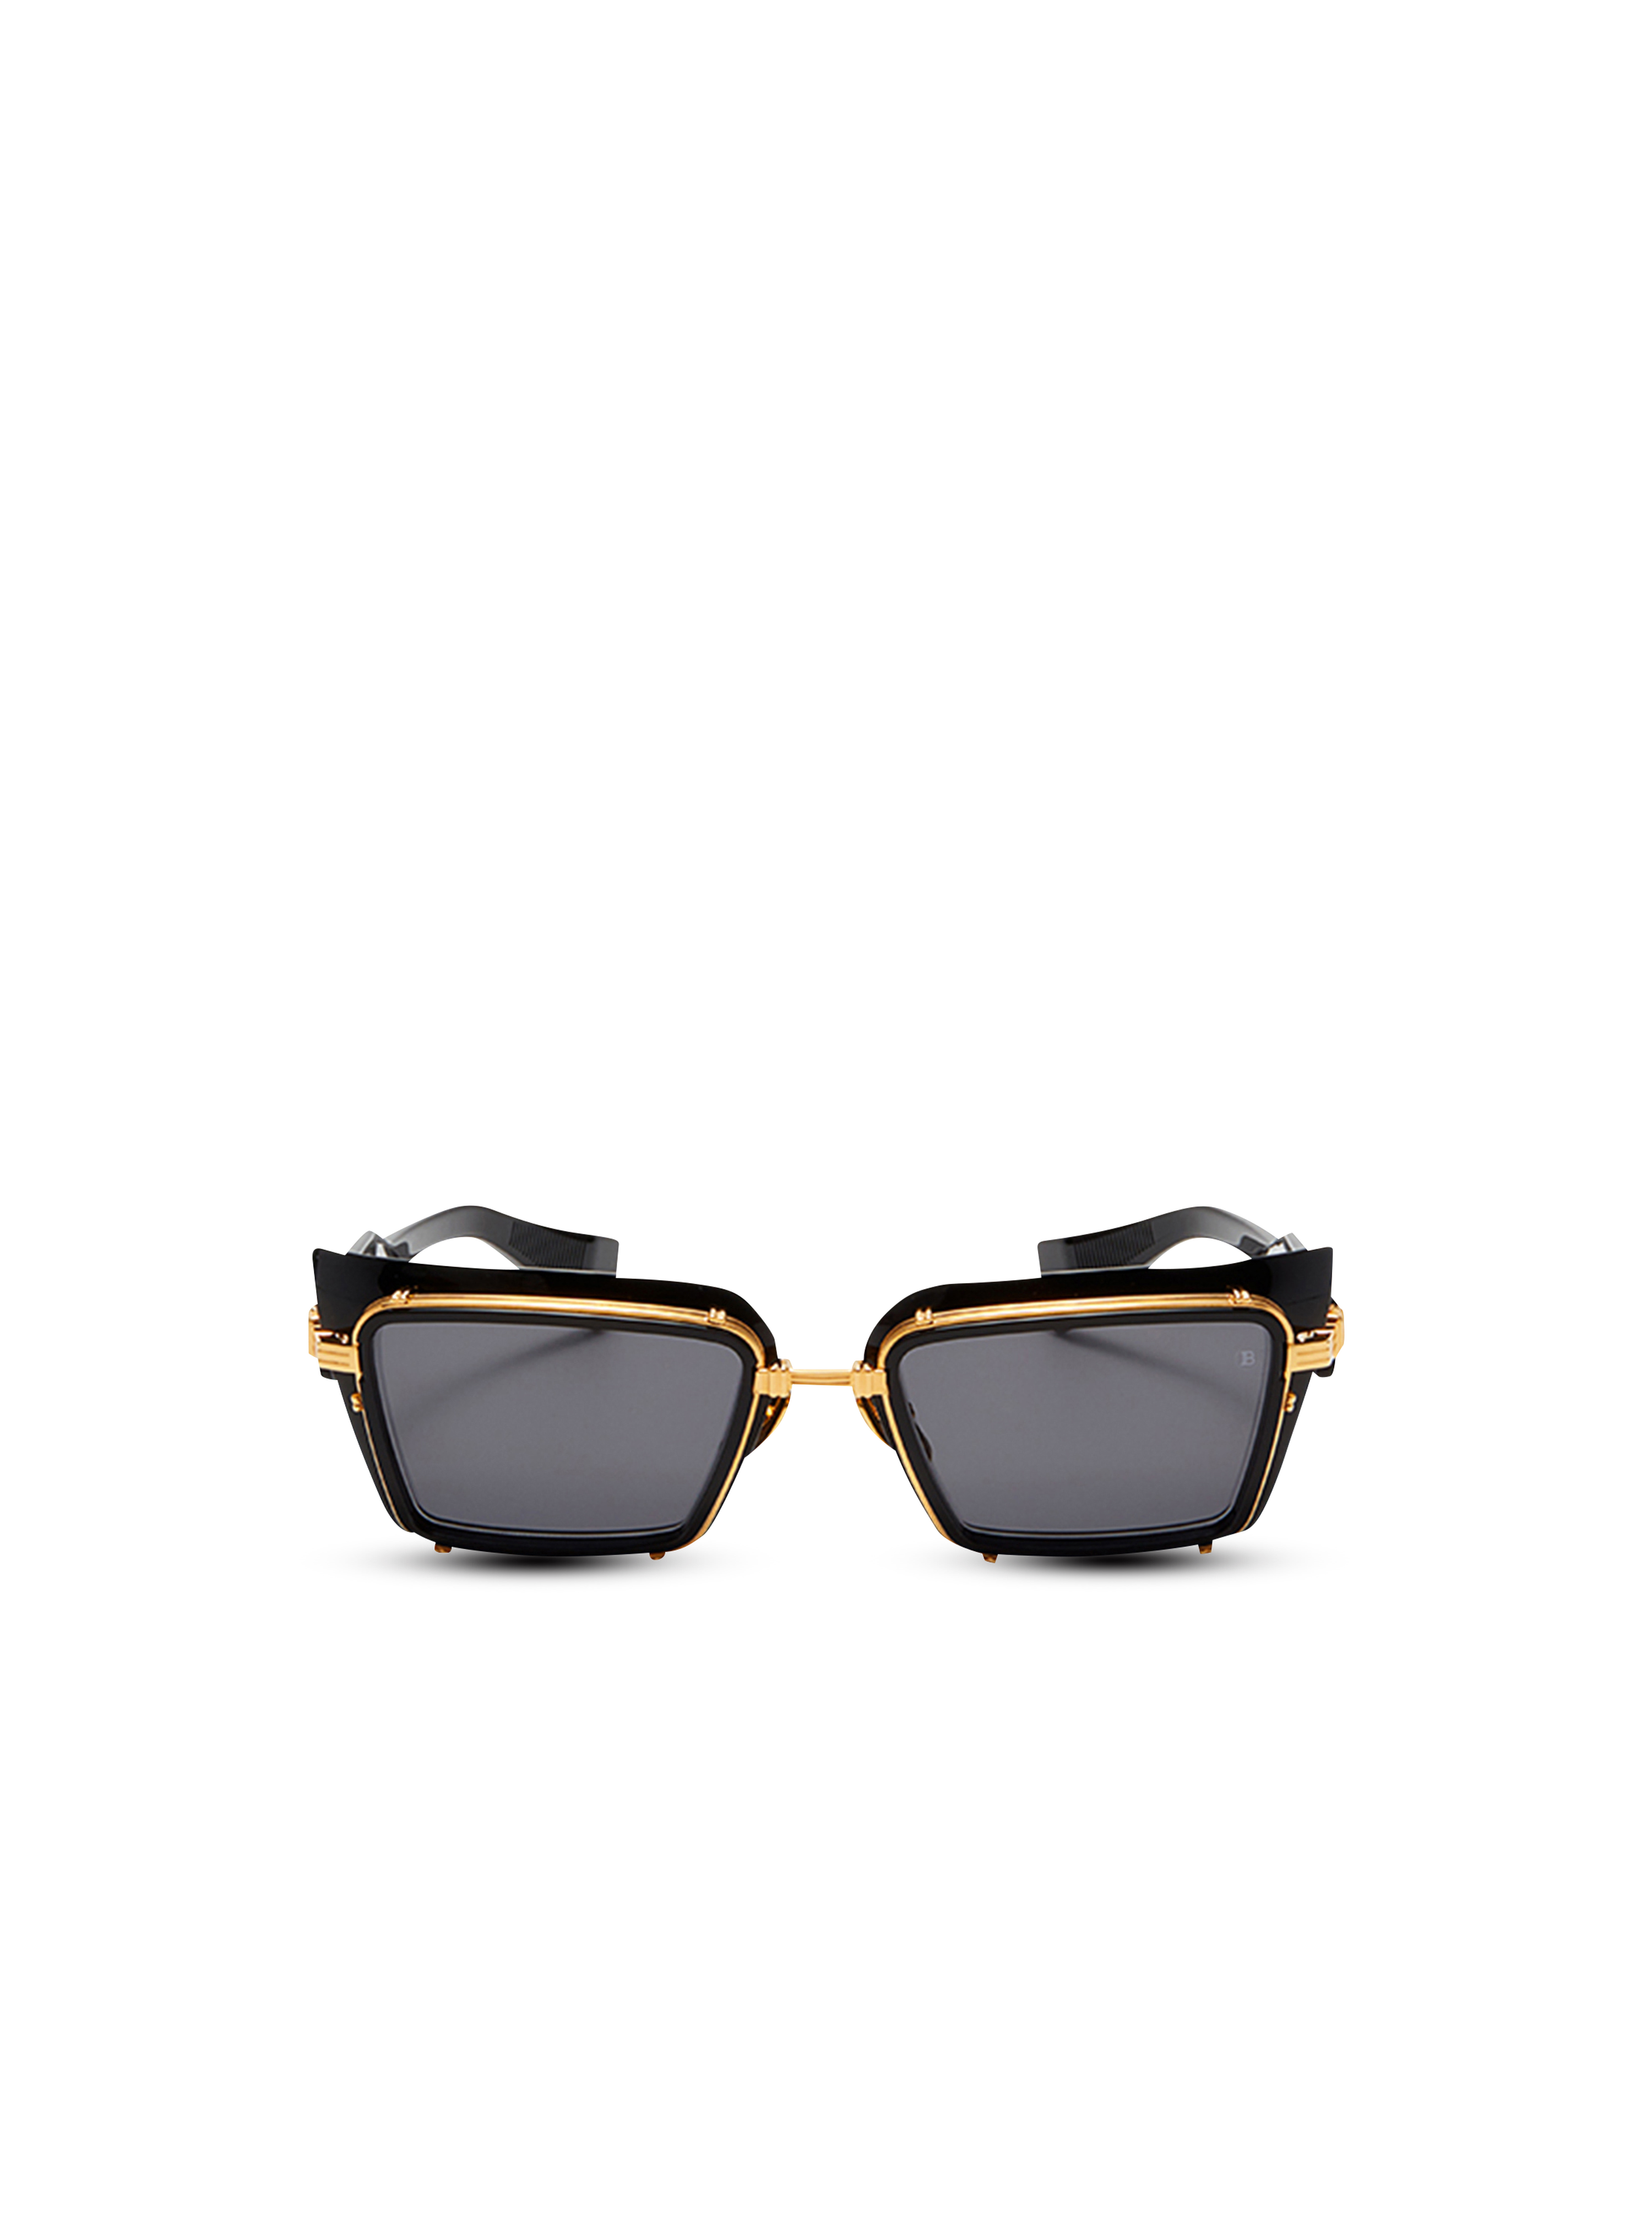 Admirable sunglasses, black